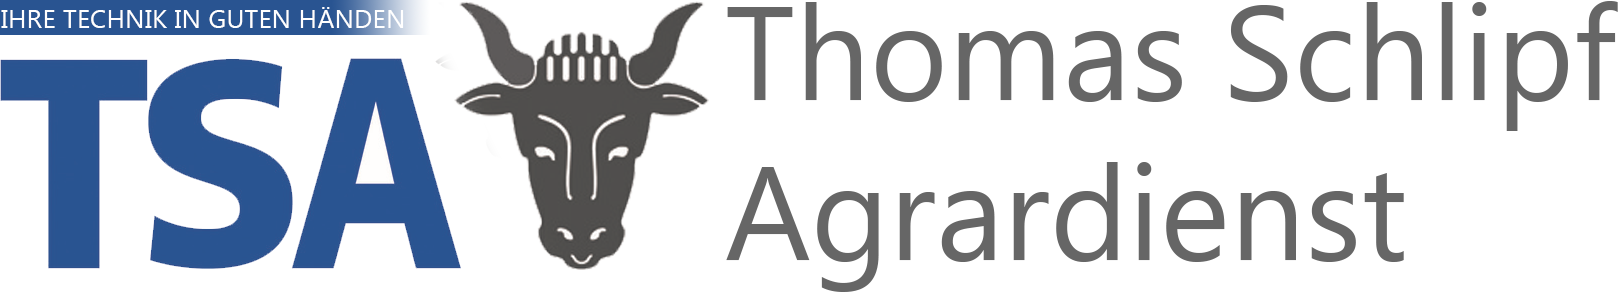 TSA Agardienst - Logo